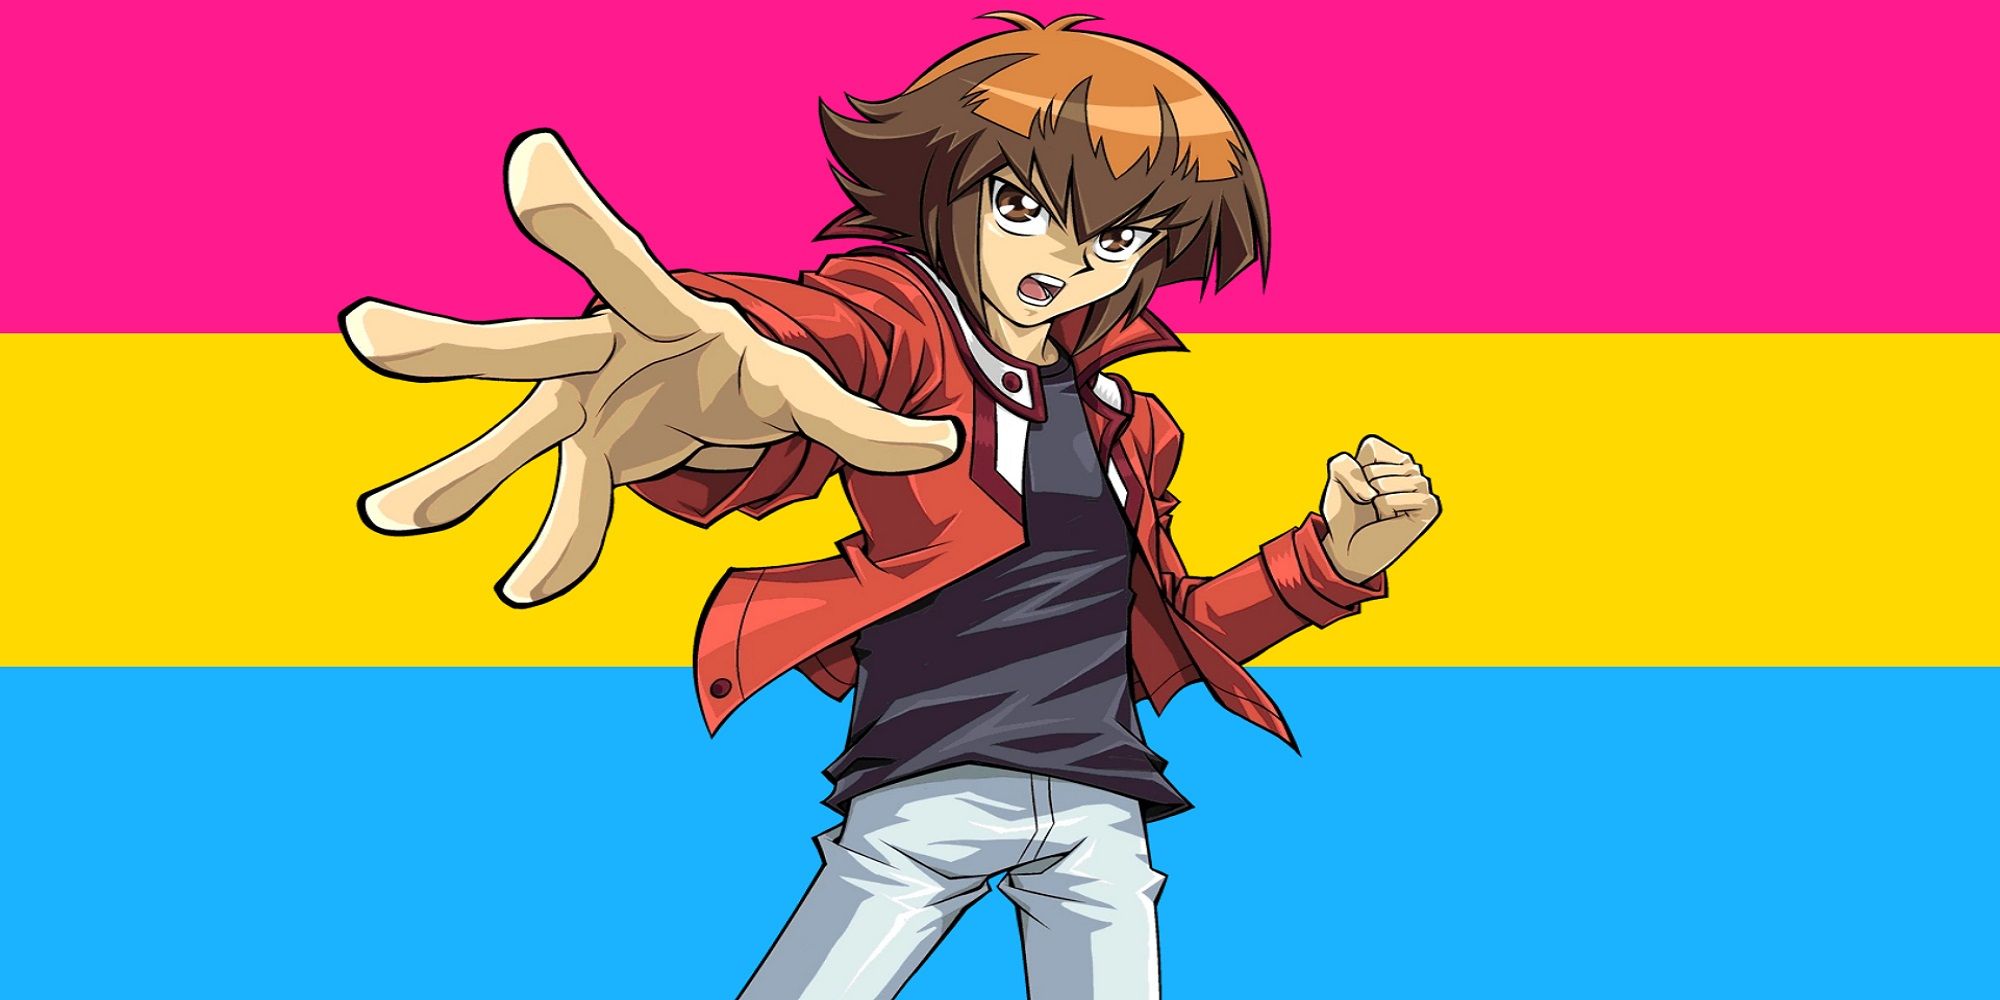 Jaden Yuki against the pansexual flag